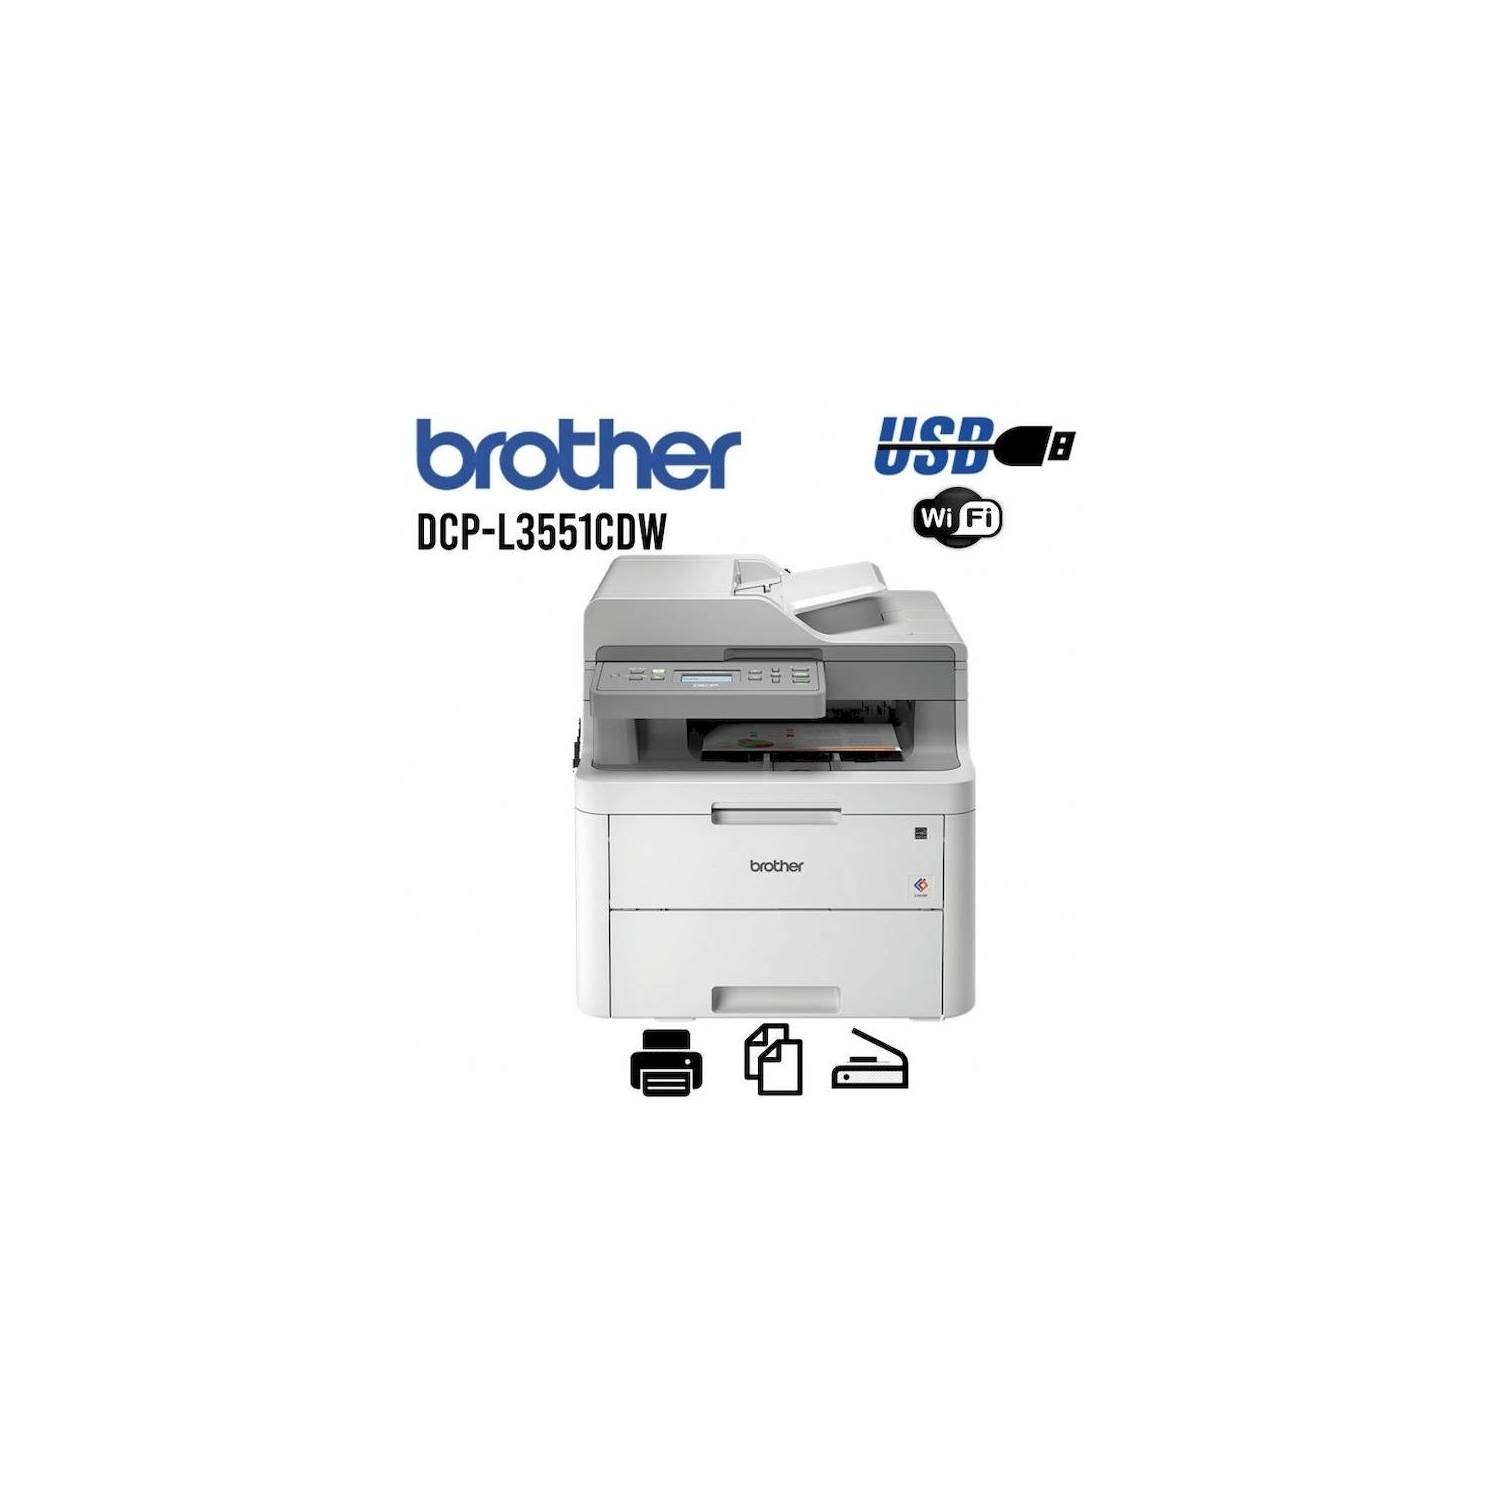 Impresora Multifuncional Brother DCP-L3551CDW Laser Color Wifi